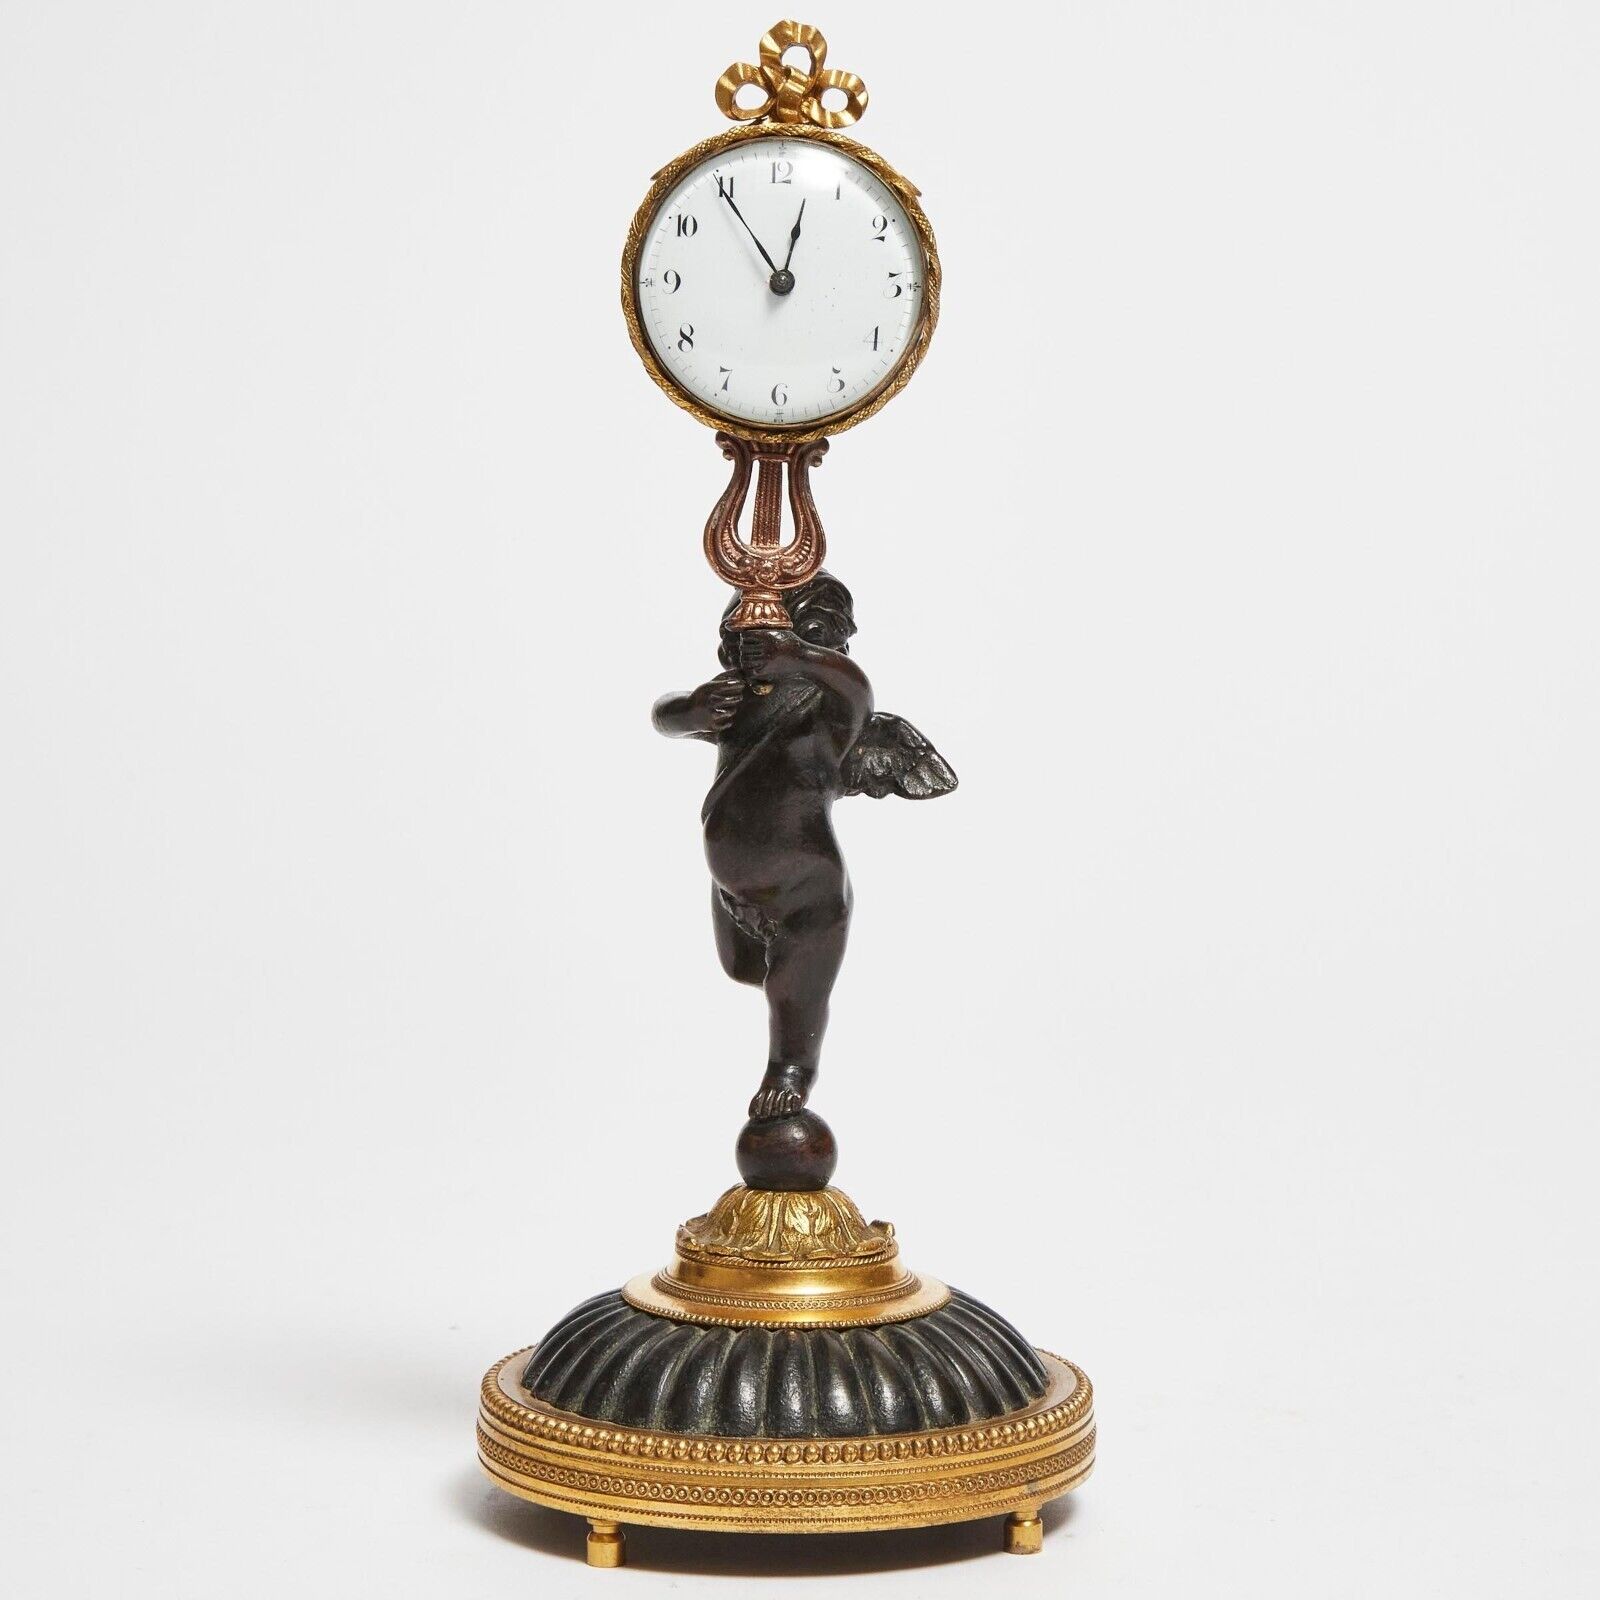 Samuel Deacon Pocket Watch/Clock circa 1797.